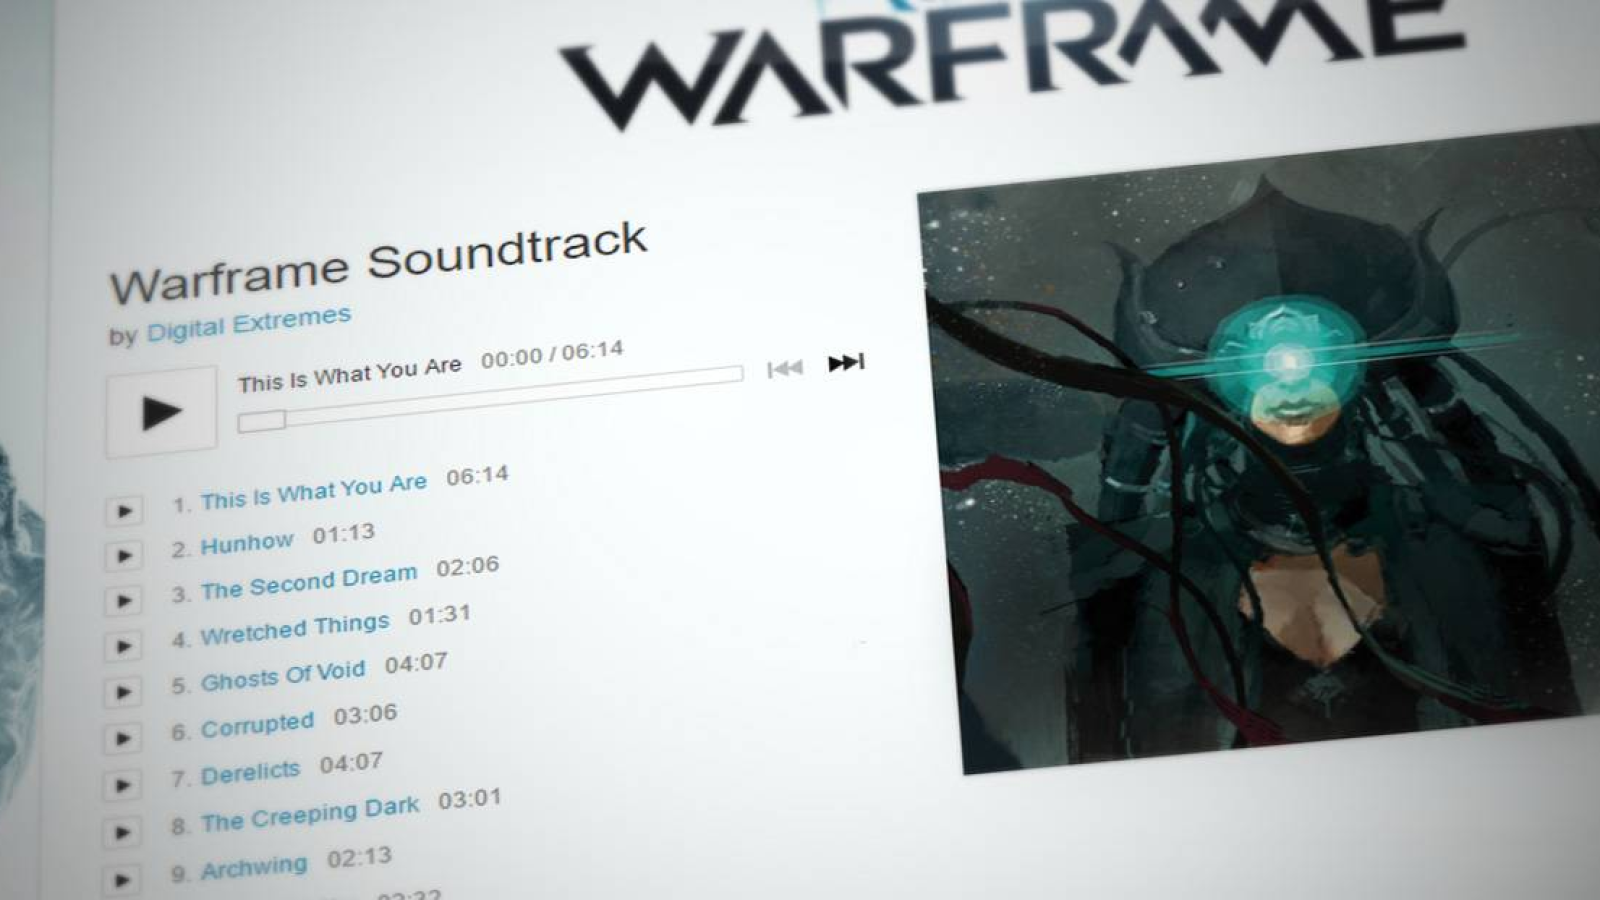 Warframe Soundtrack